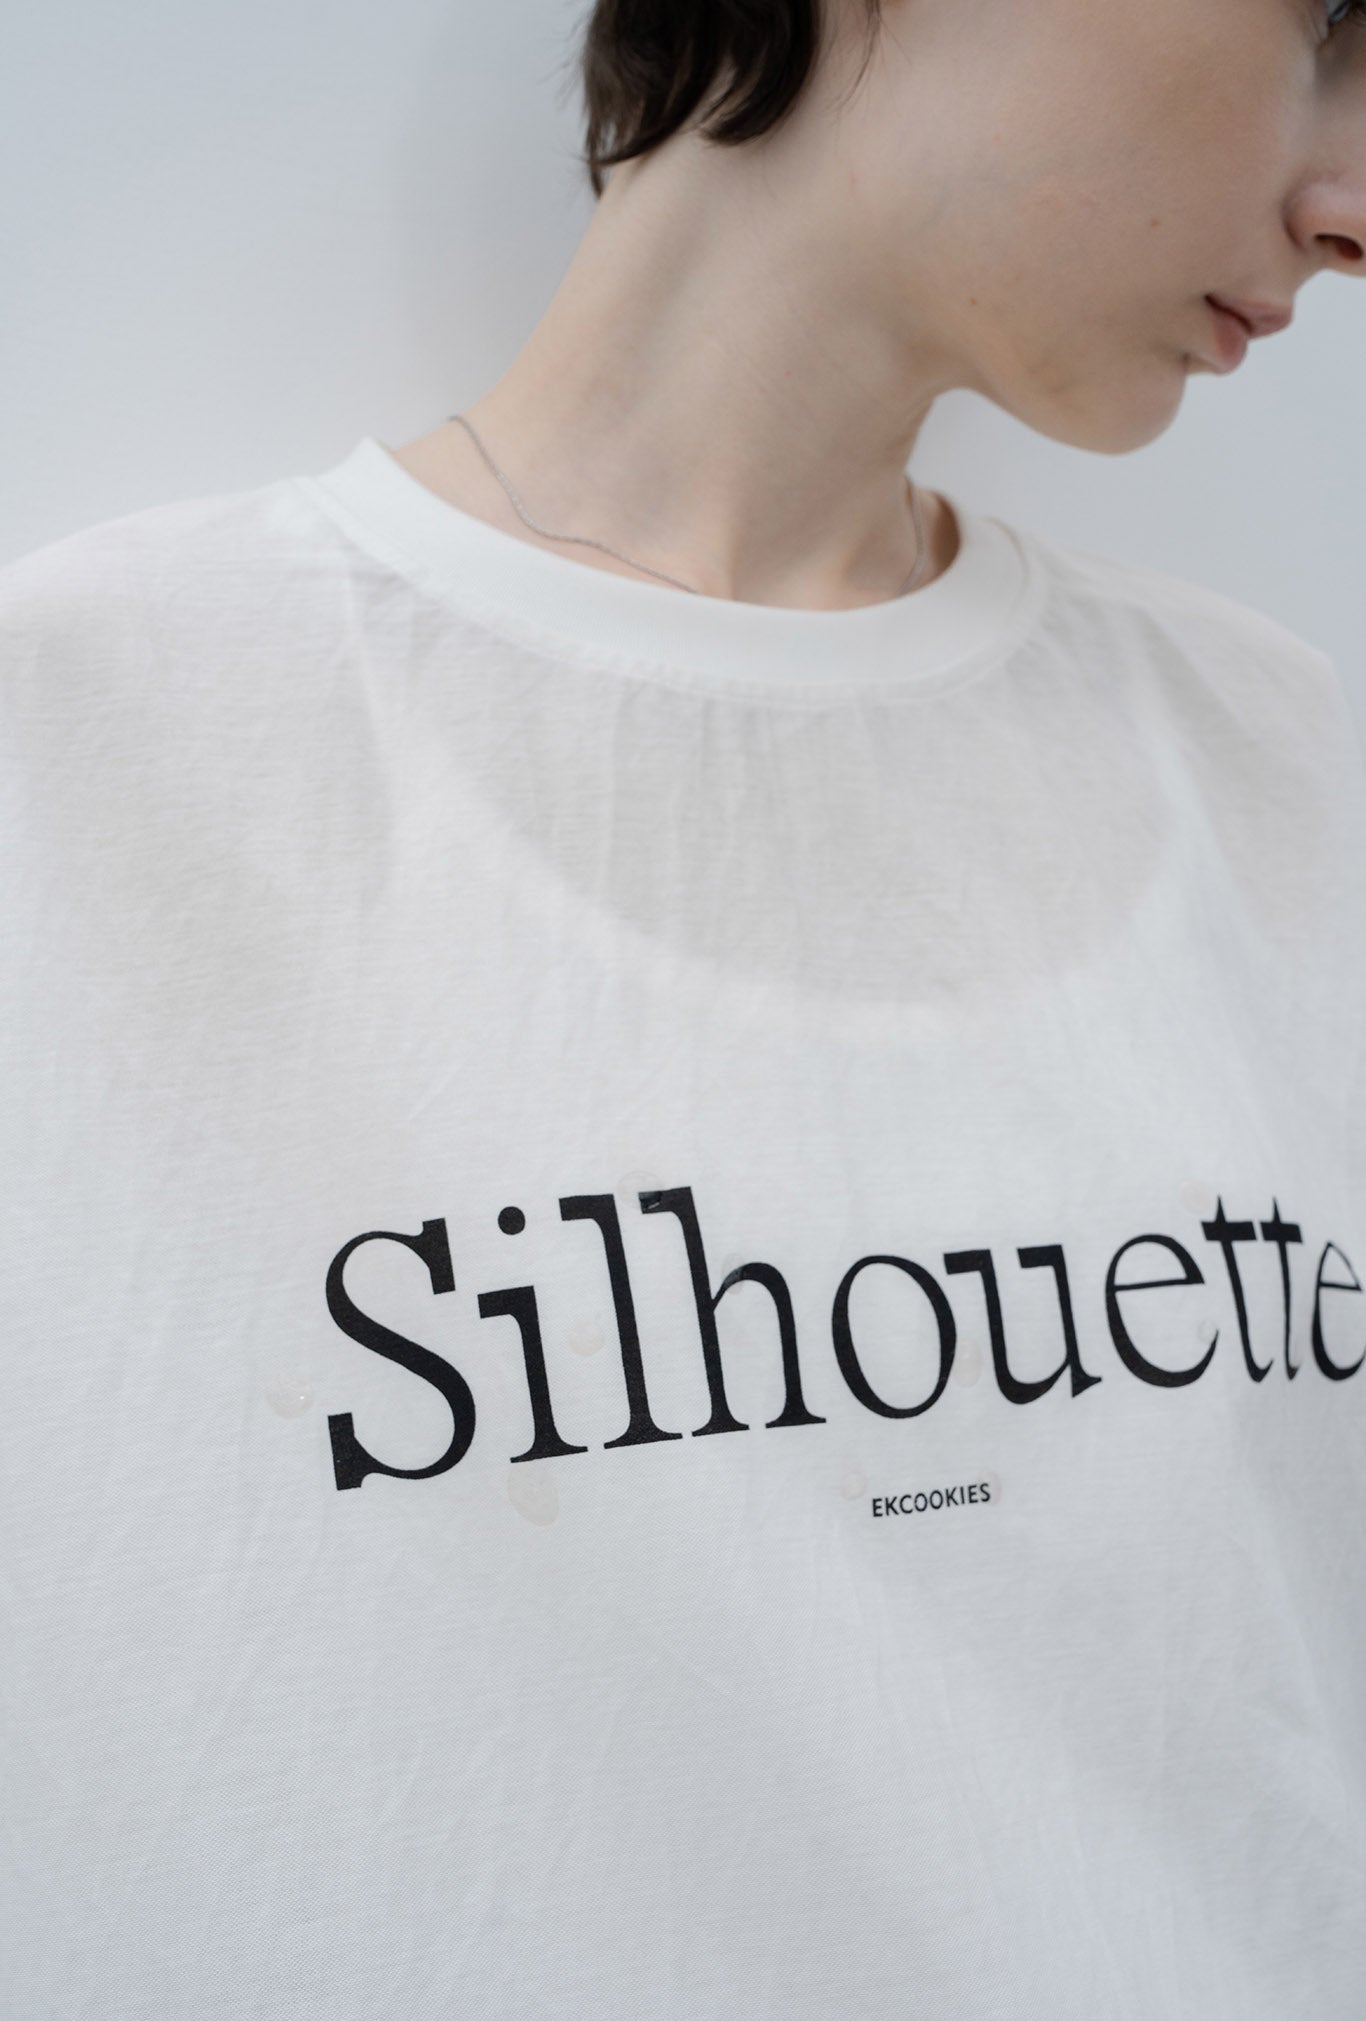 "silhouette" 프린트 컷소우 / T셔츠